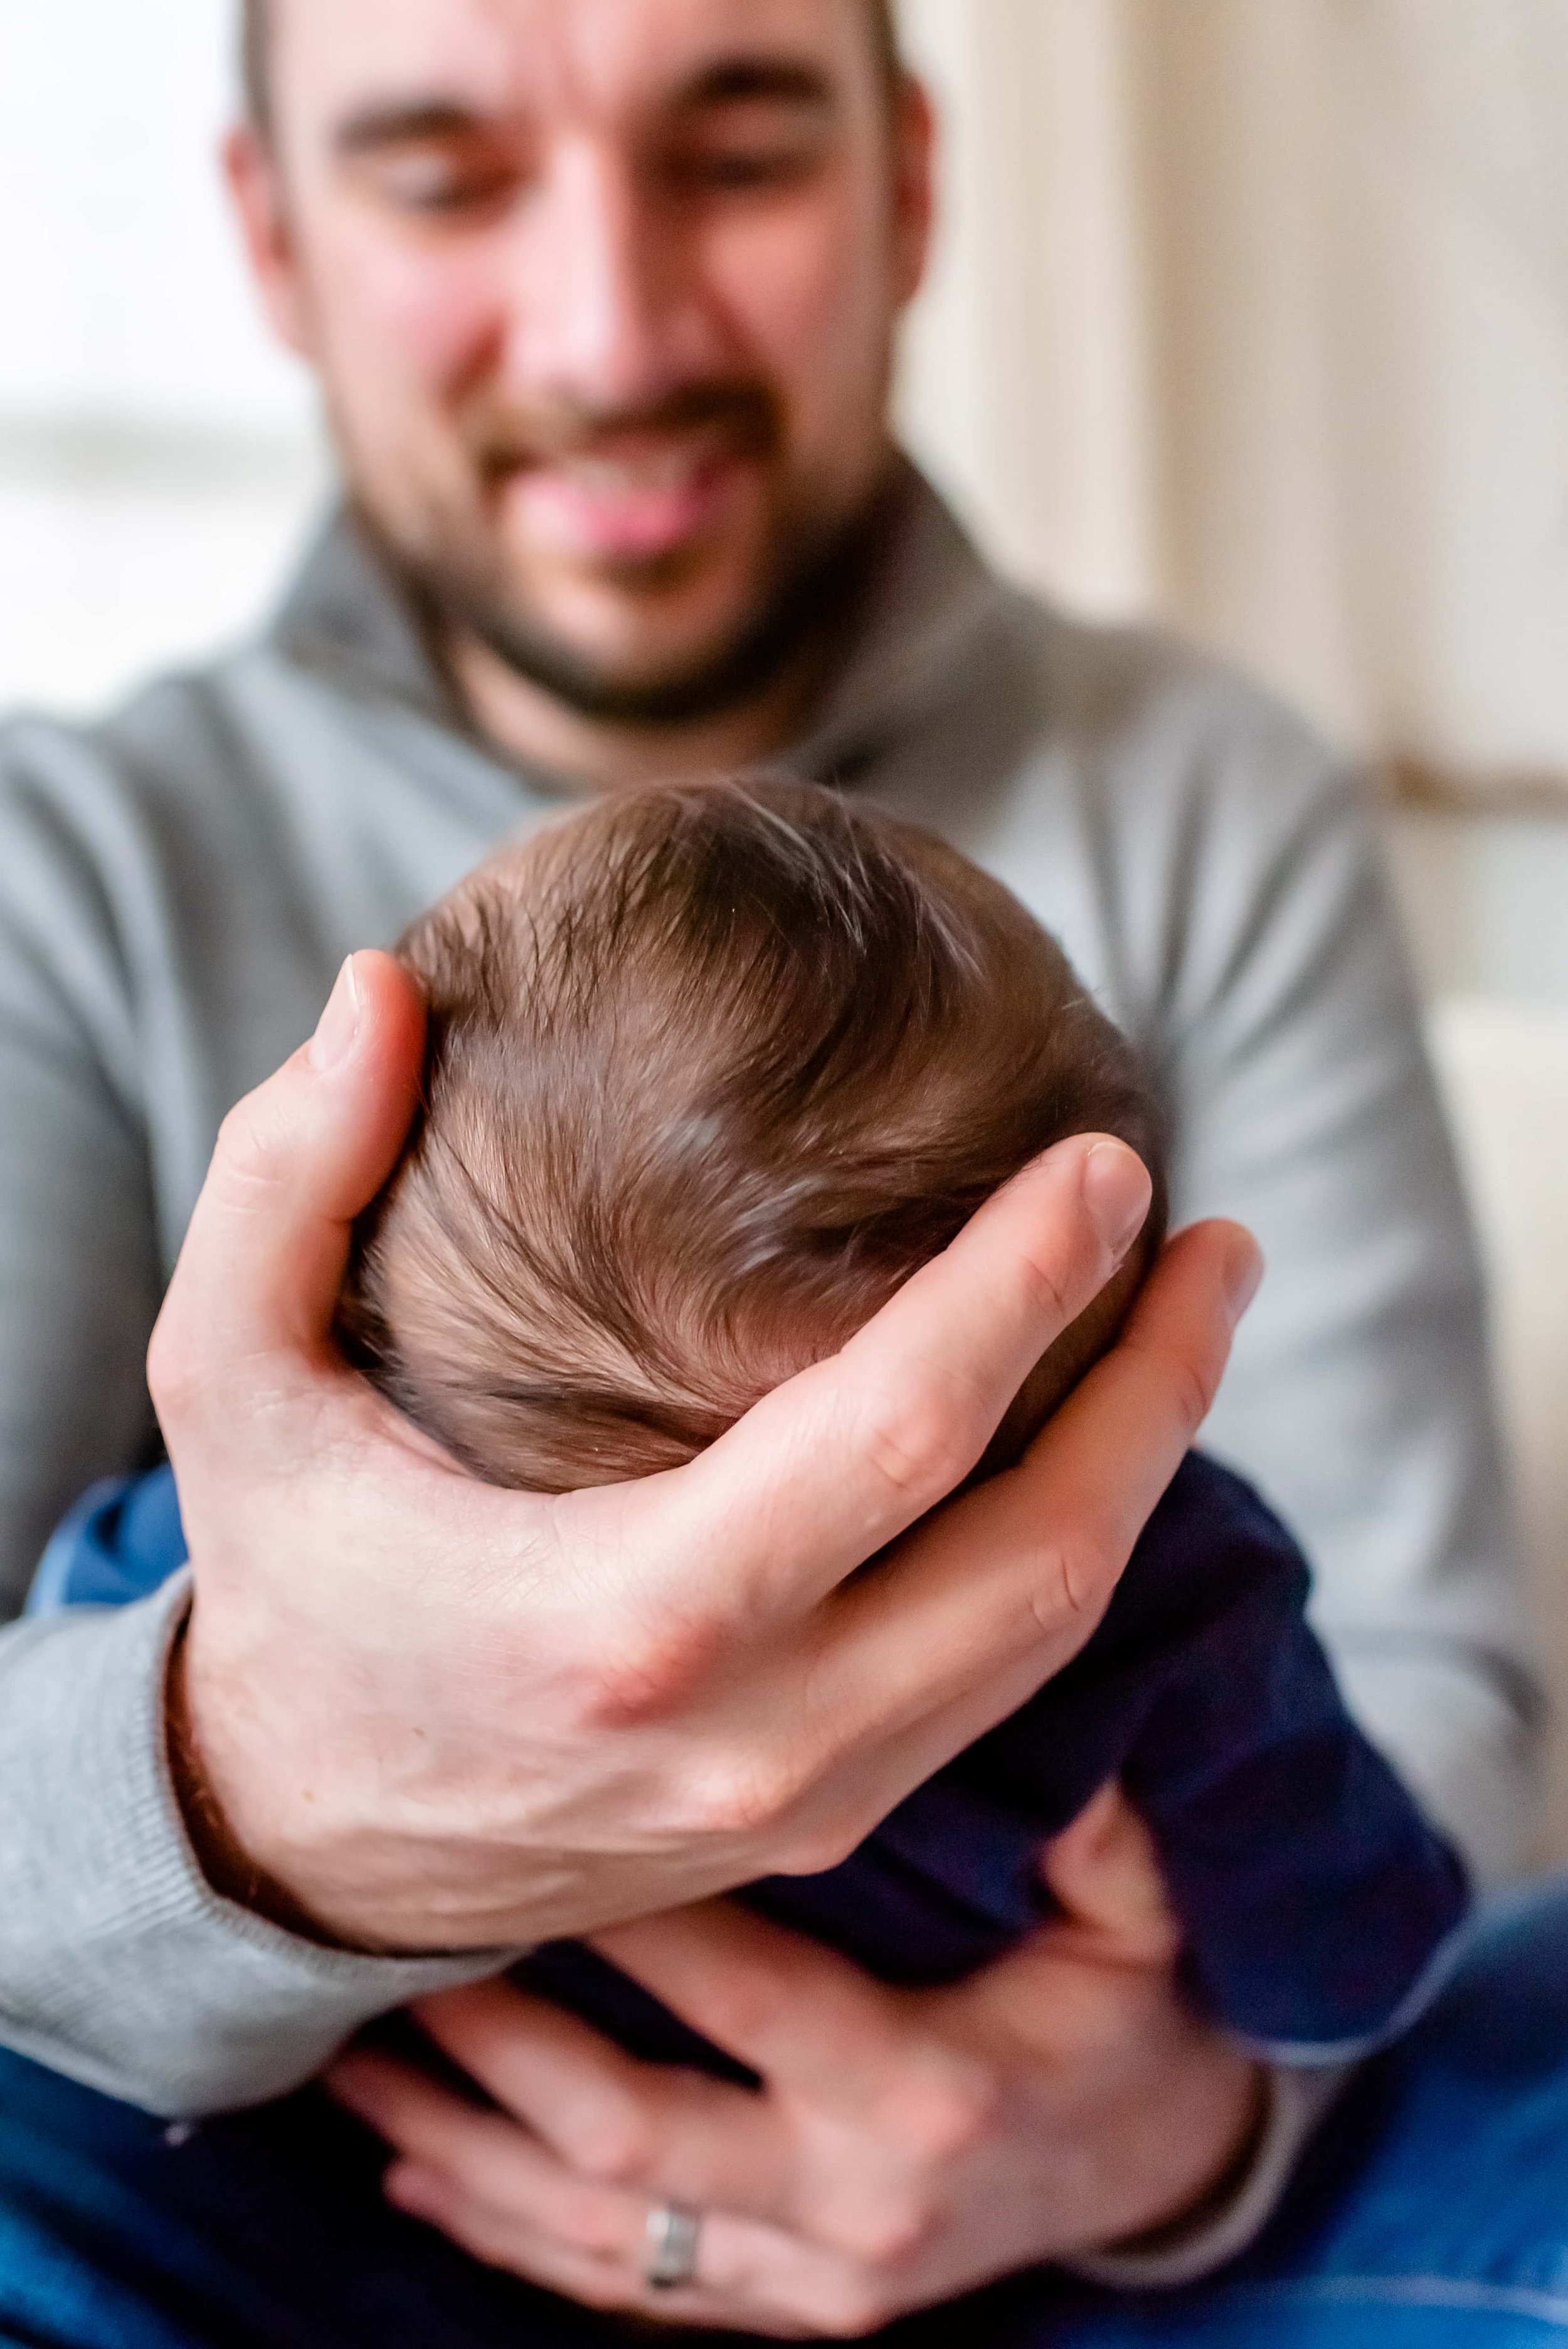 Maryland Newborn Photo - closeup of baby 's head in dad's hand